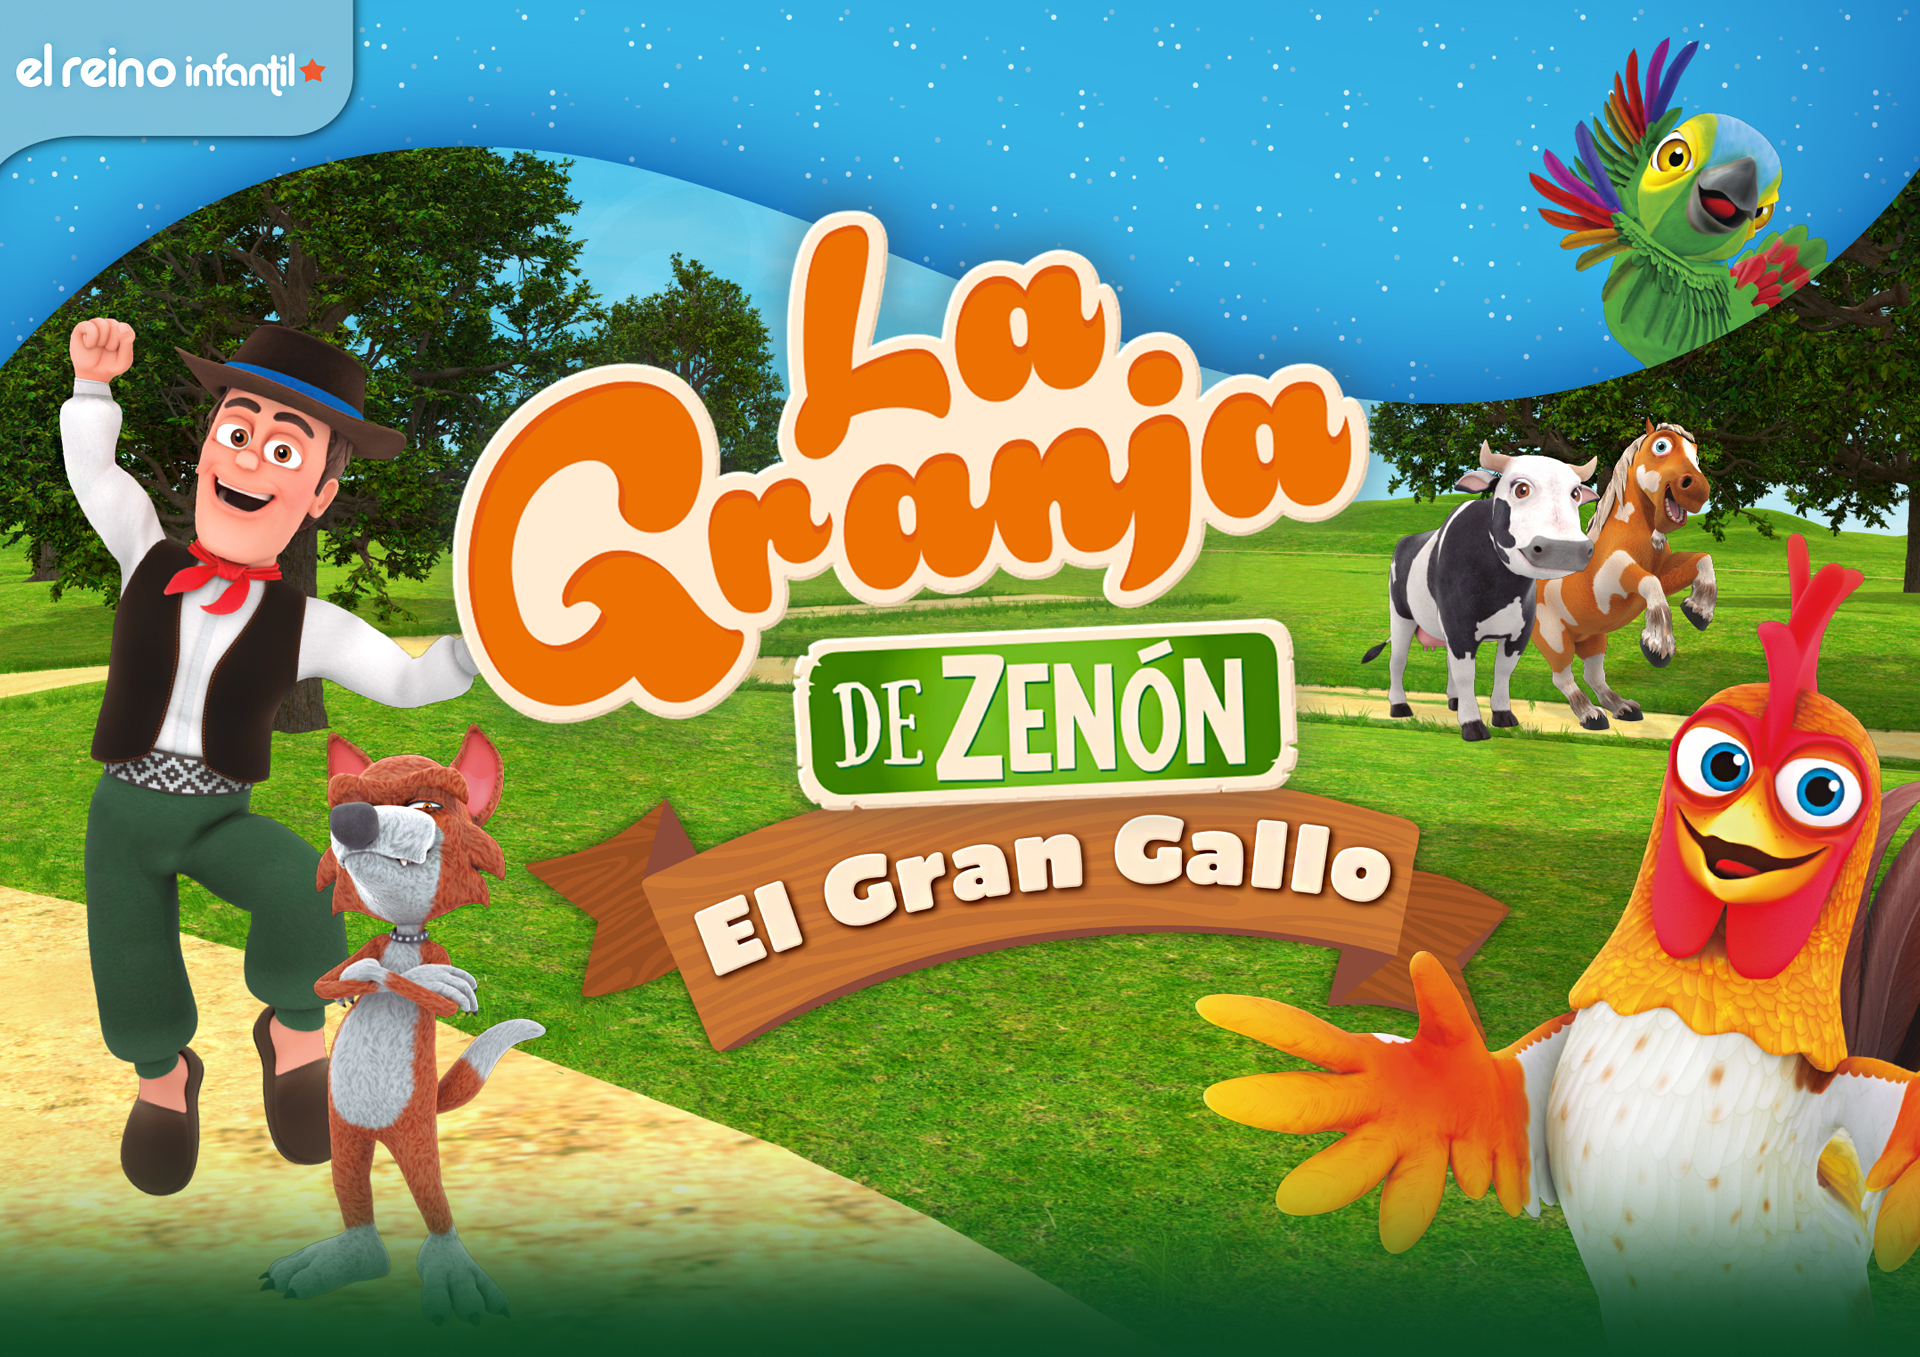 La granja de Zenón - El Gran Gallo